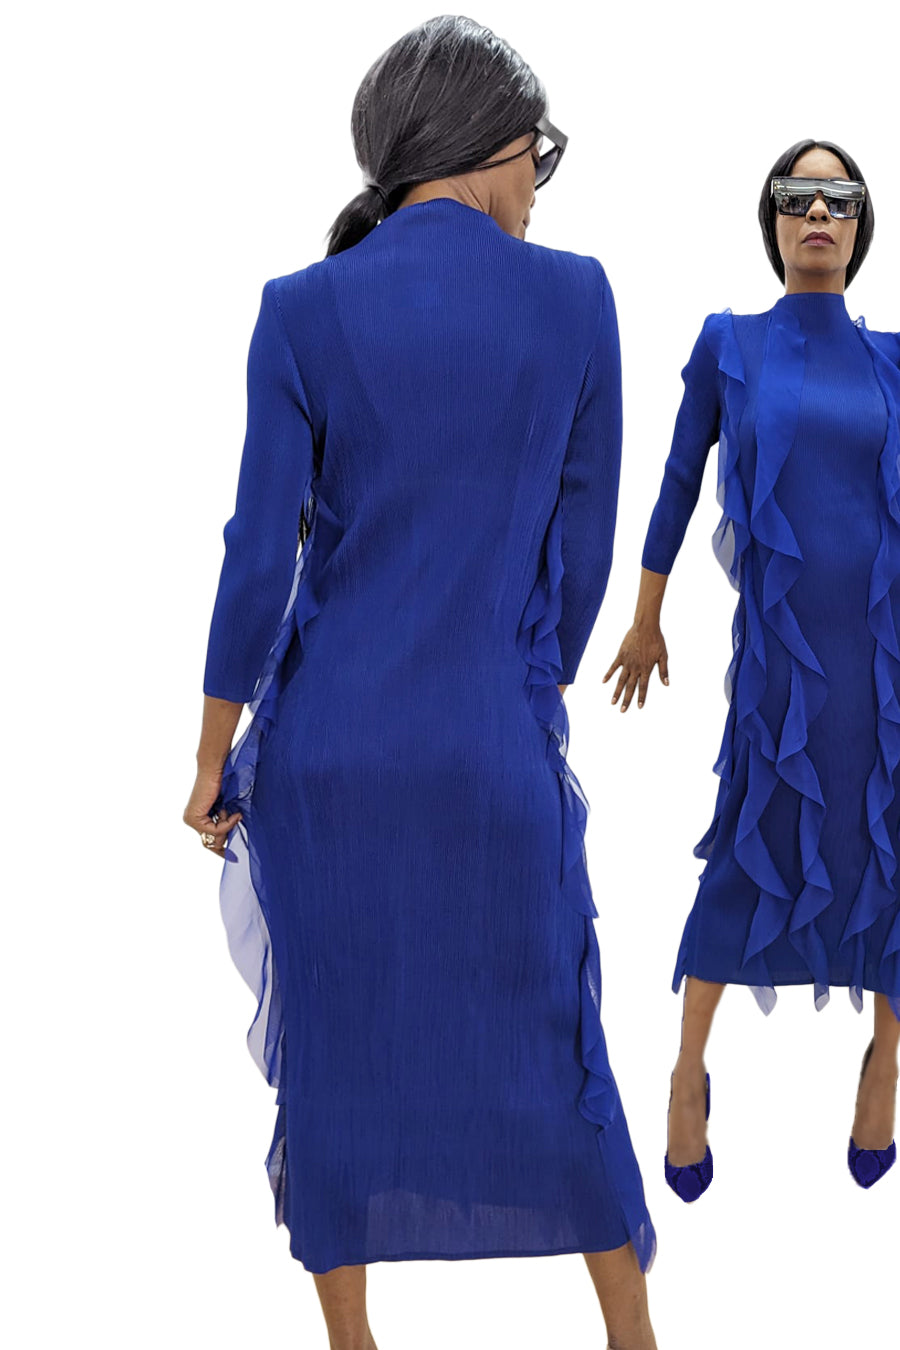 N1040 DRESS (ROYAL BLUE, BLK, PURPLE)